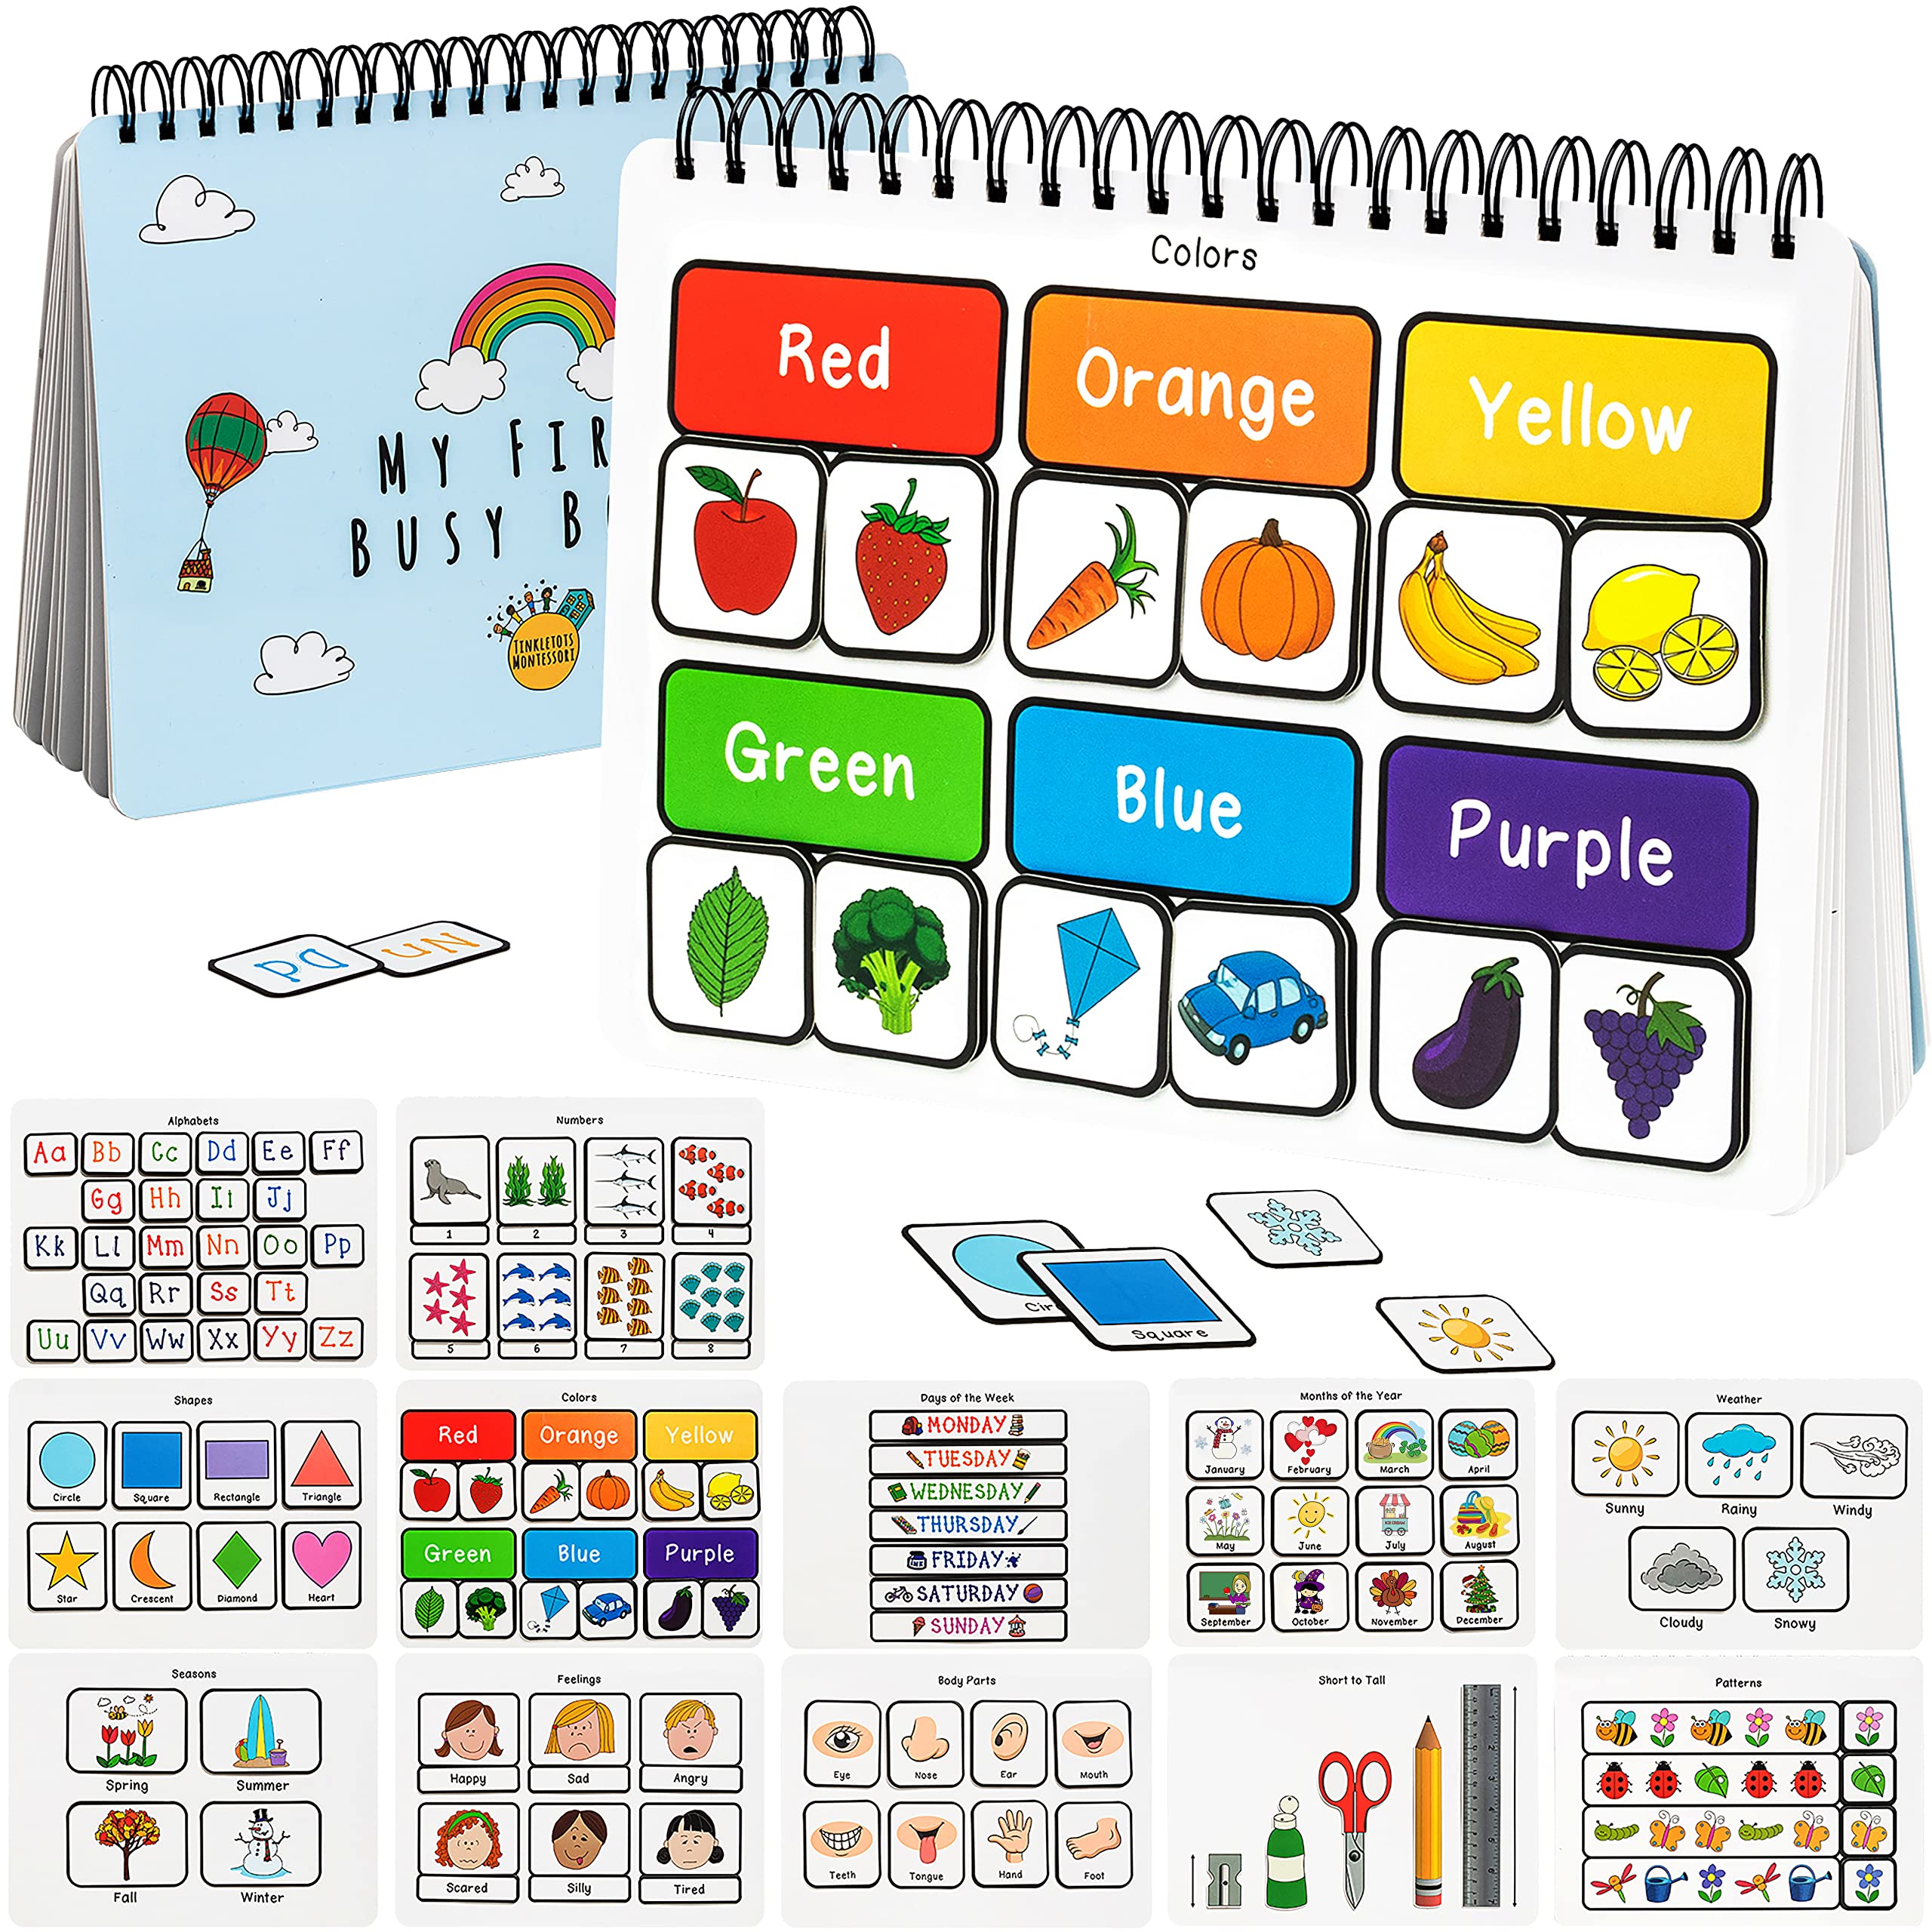 Tinkletots Montessori Preschool Busy Book